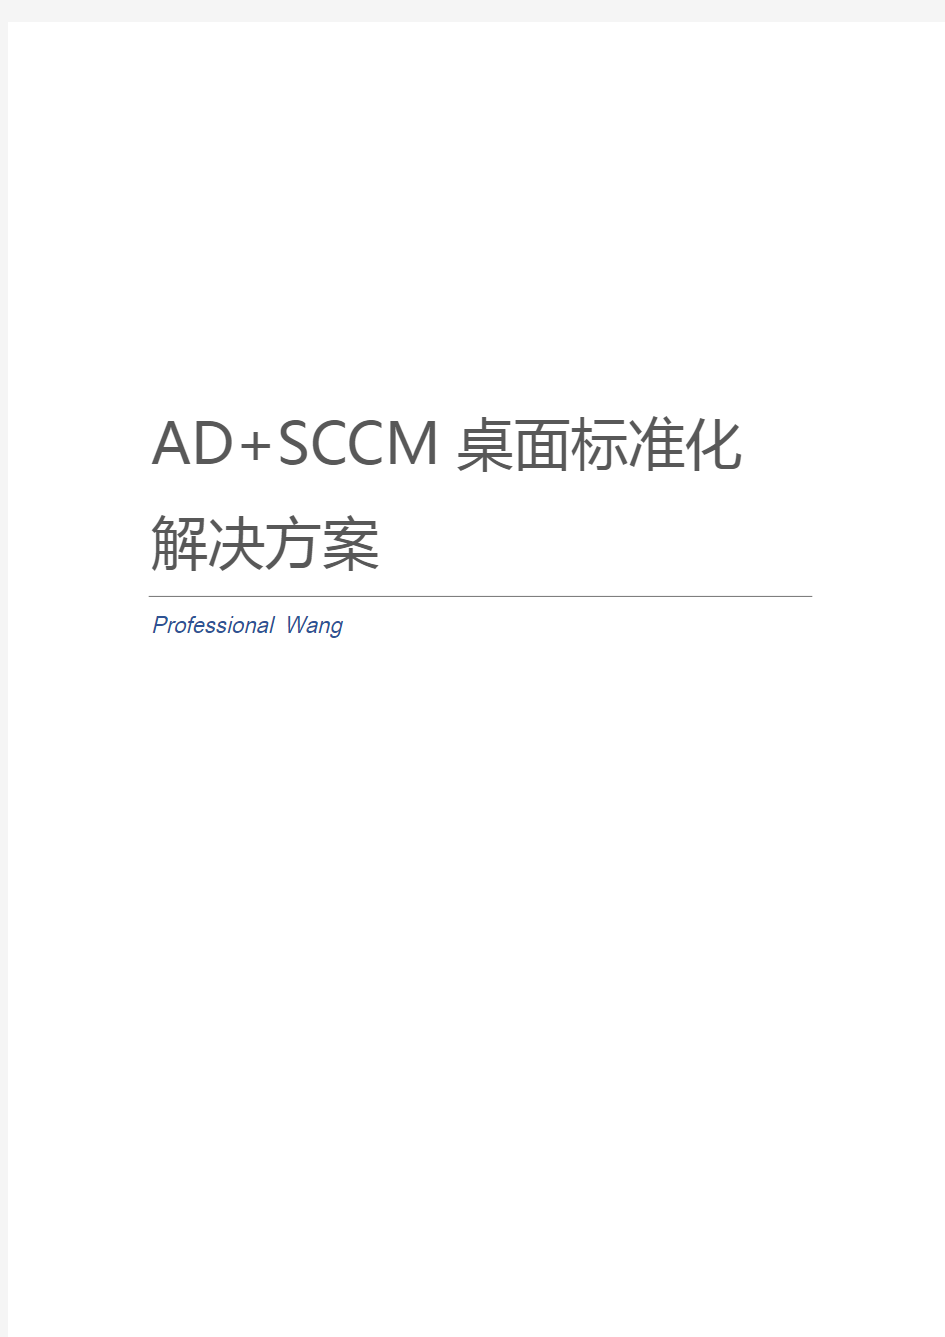 AD+SCCM桌面标准化解决方案